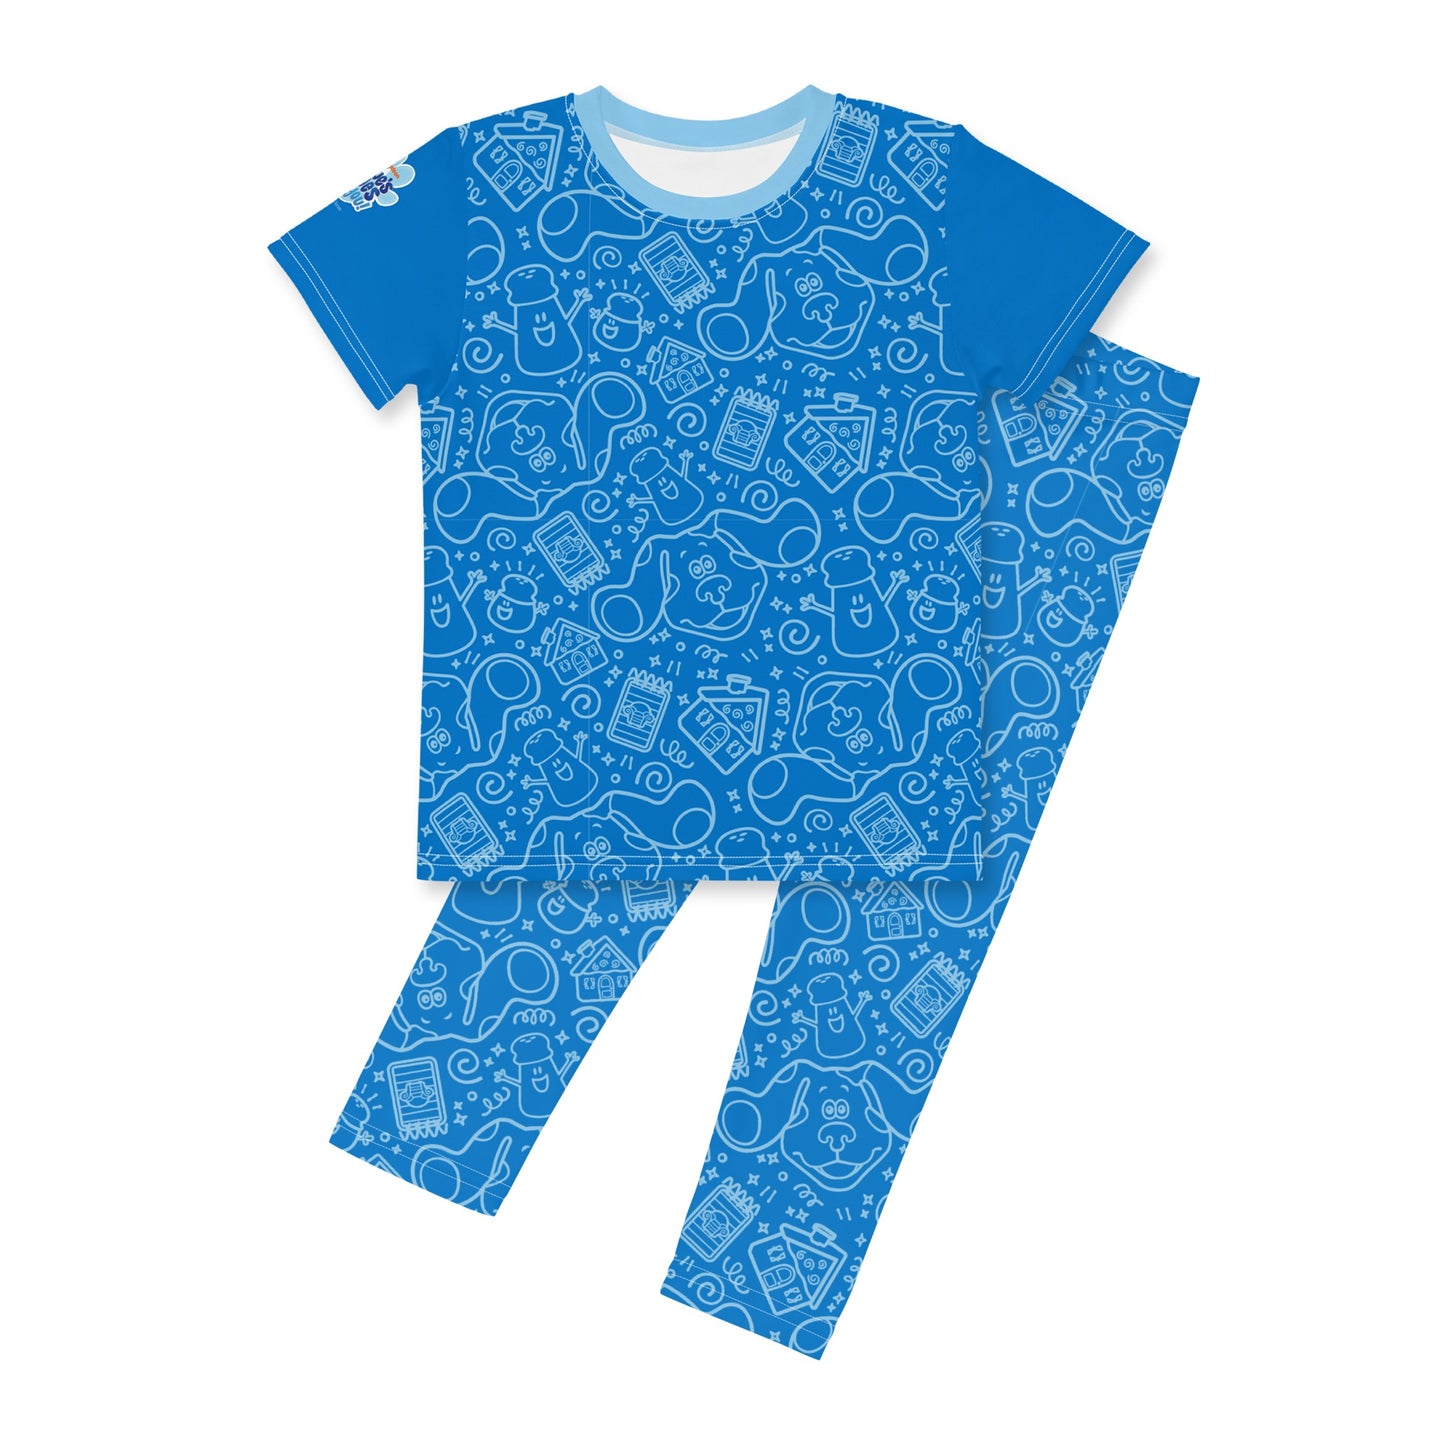 Blue's Clues & You! Friends Pattern Kids Short Sleeve T-Shirt